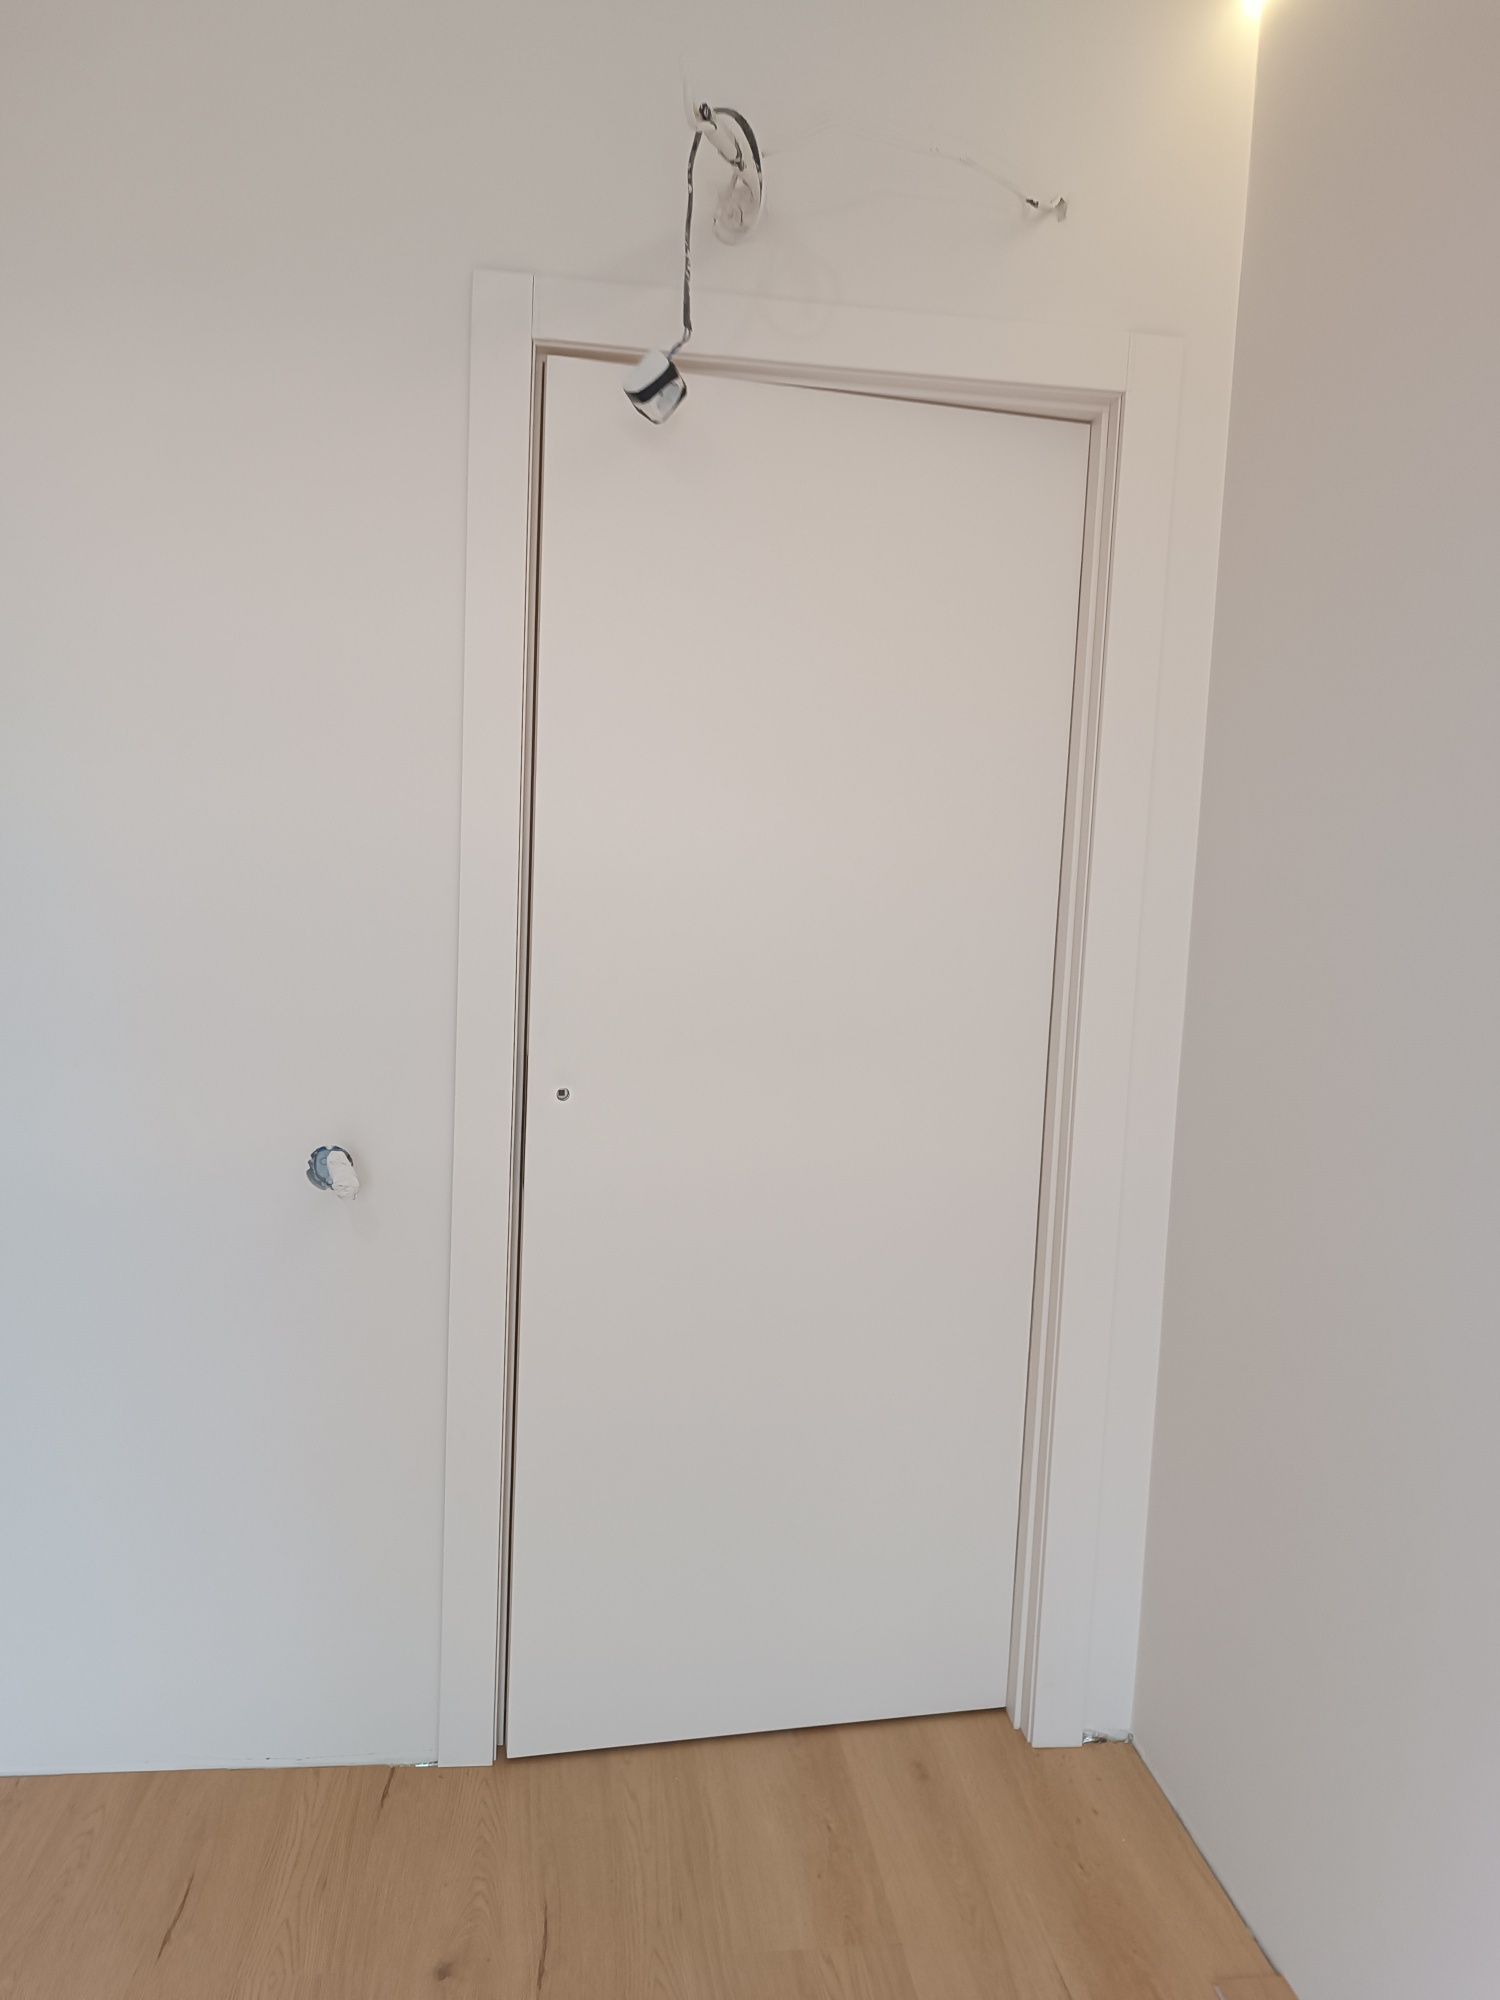 Монтаж межкомнатных дверей Установка Встановлення дверей демонтаж